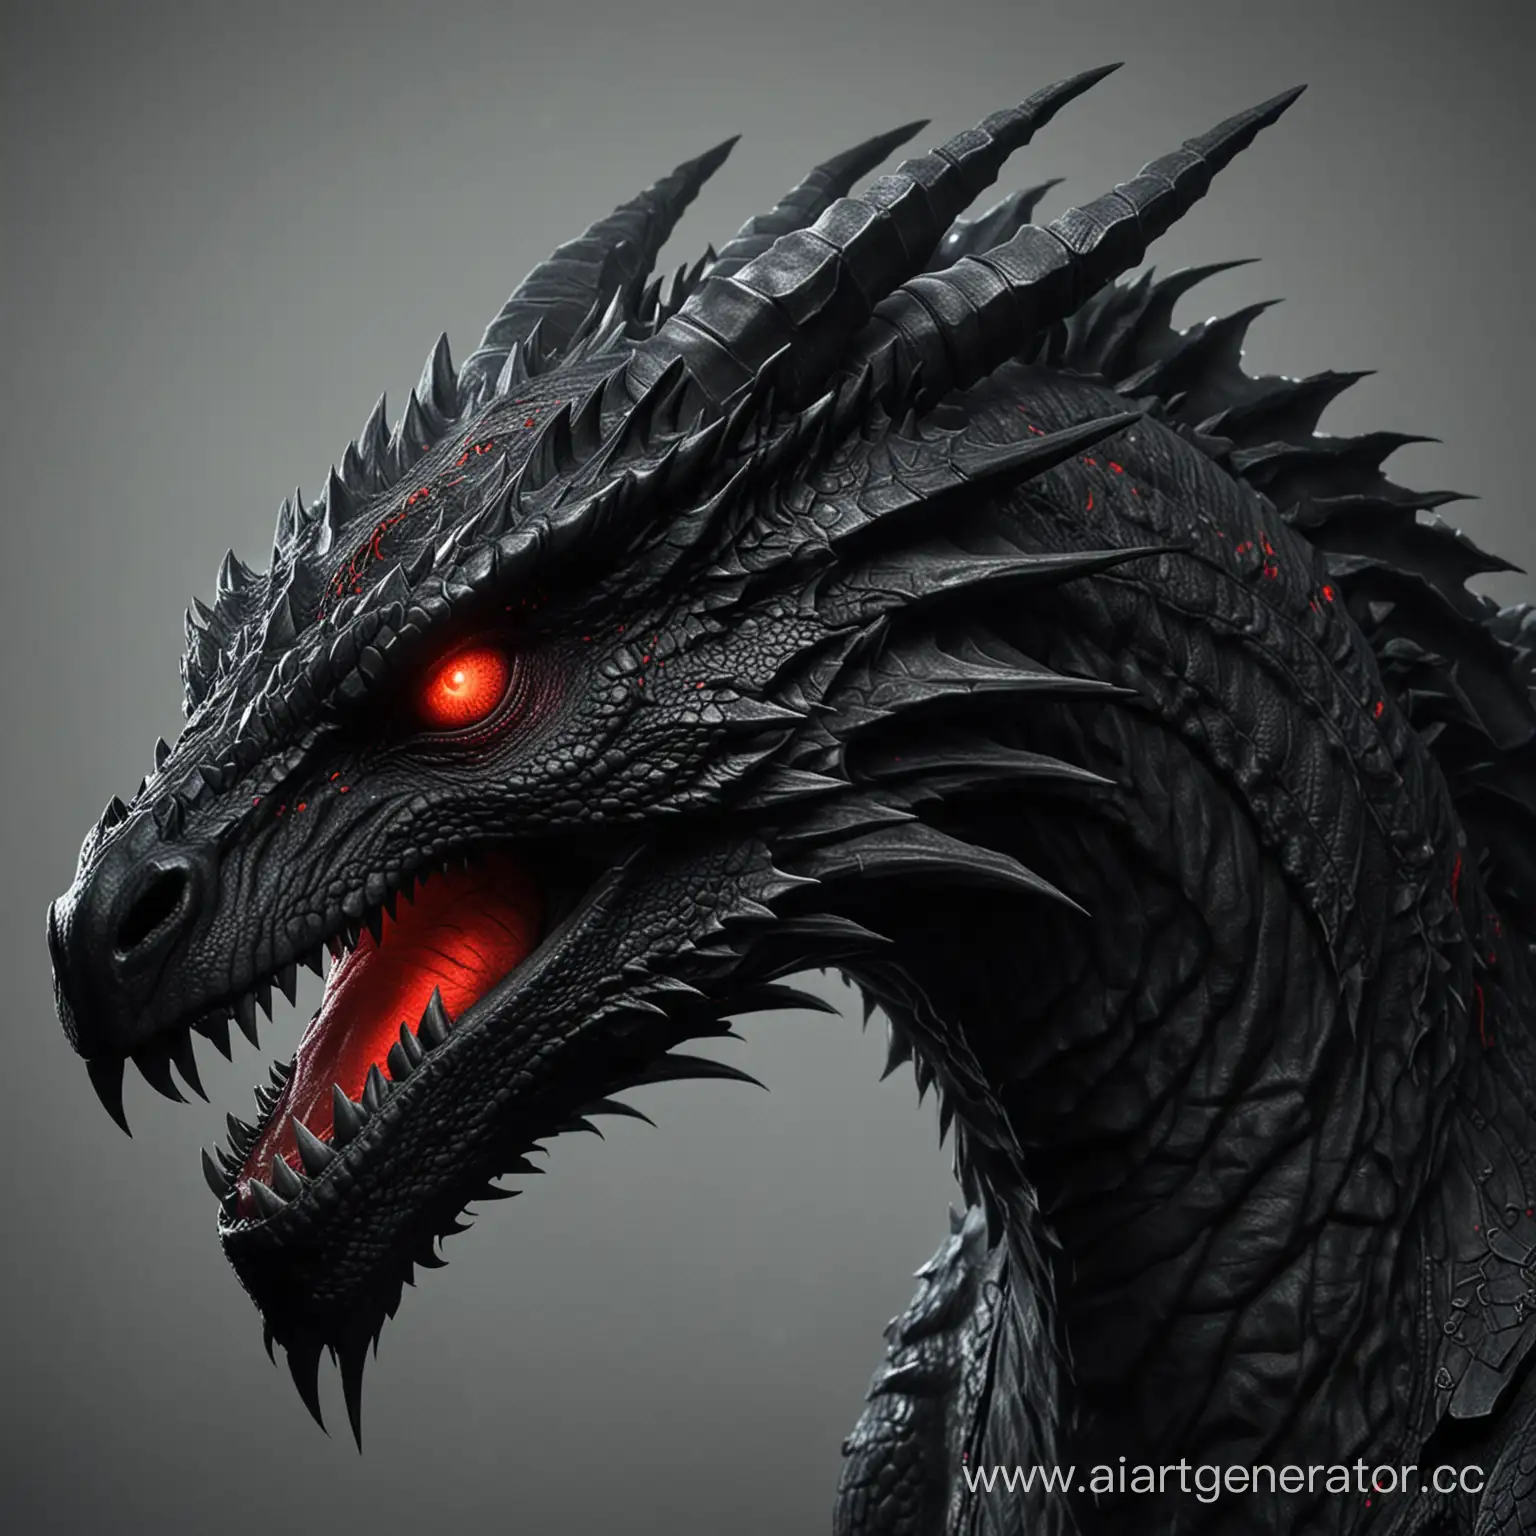 Majestic-Black-Dragon-with-Fiery-Red-Eyes-Skyrim-Style-Fantasy-Art